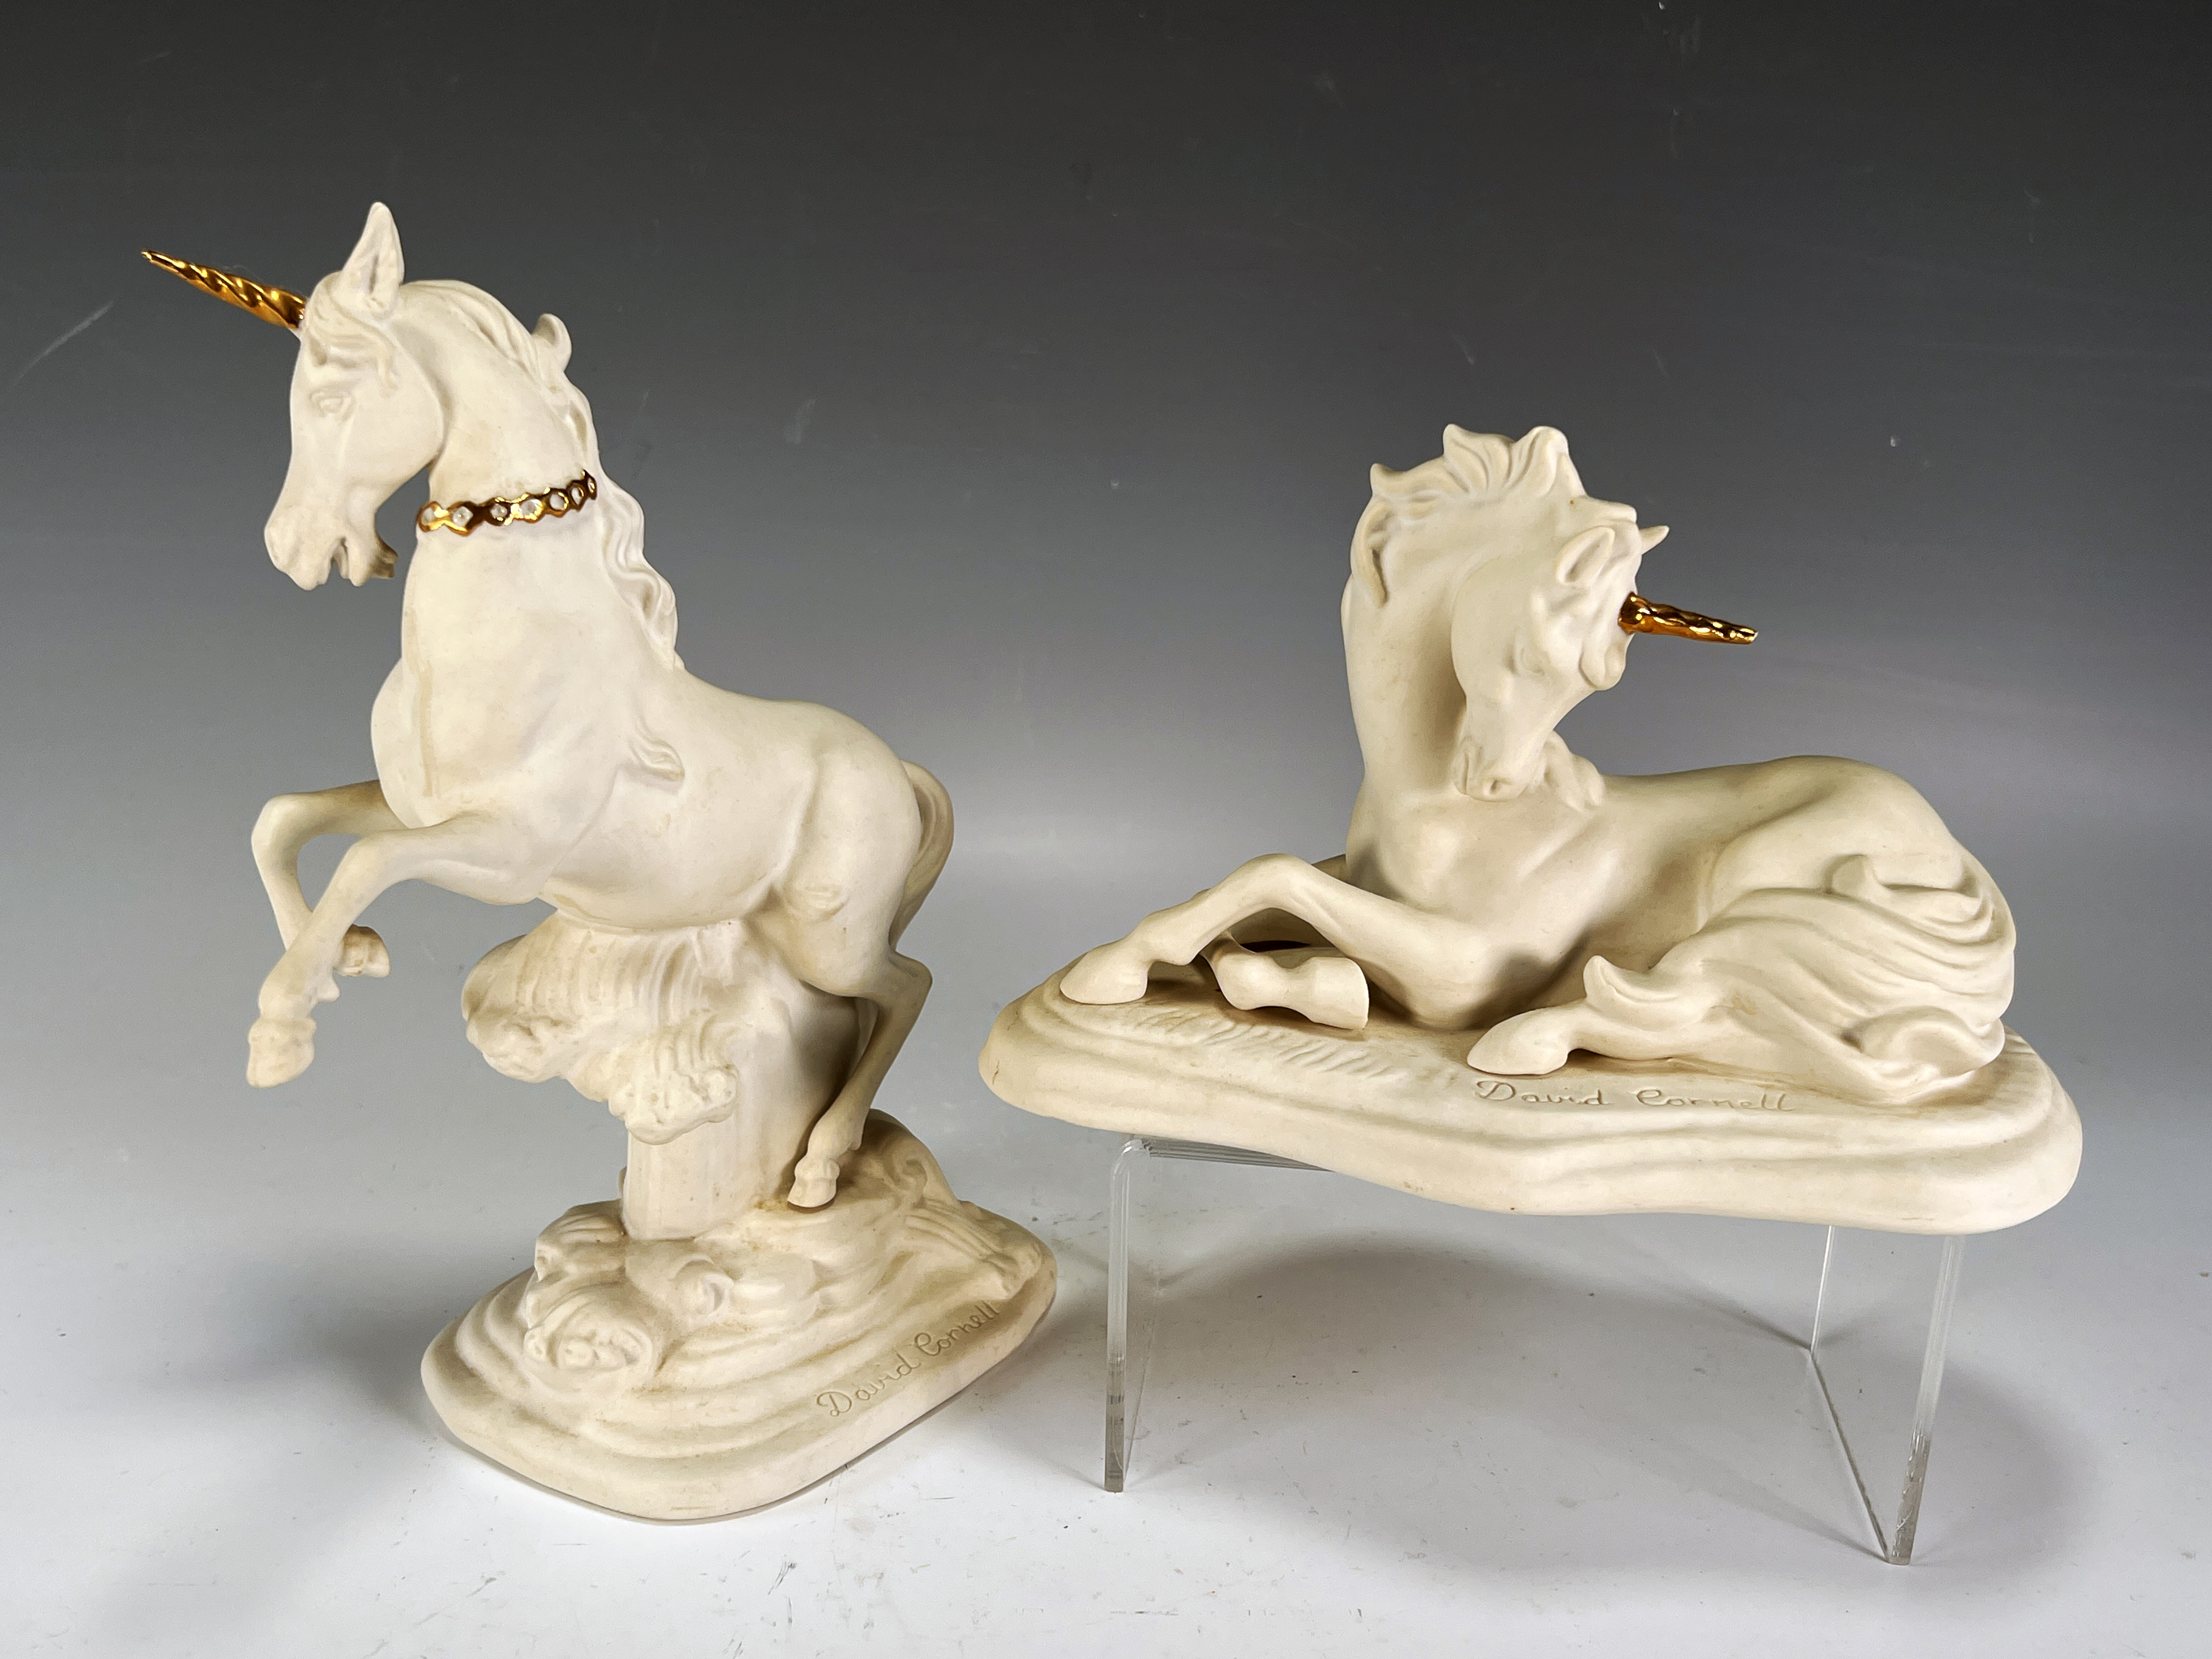 Bisque Porcelain Unicorns By David Cornell image 1